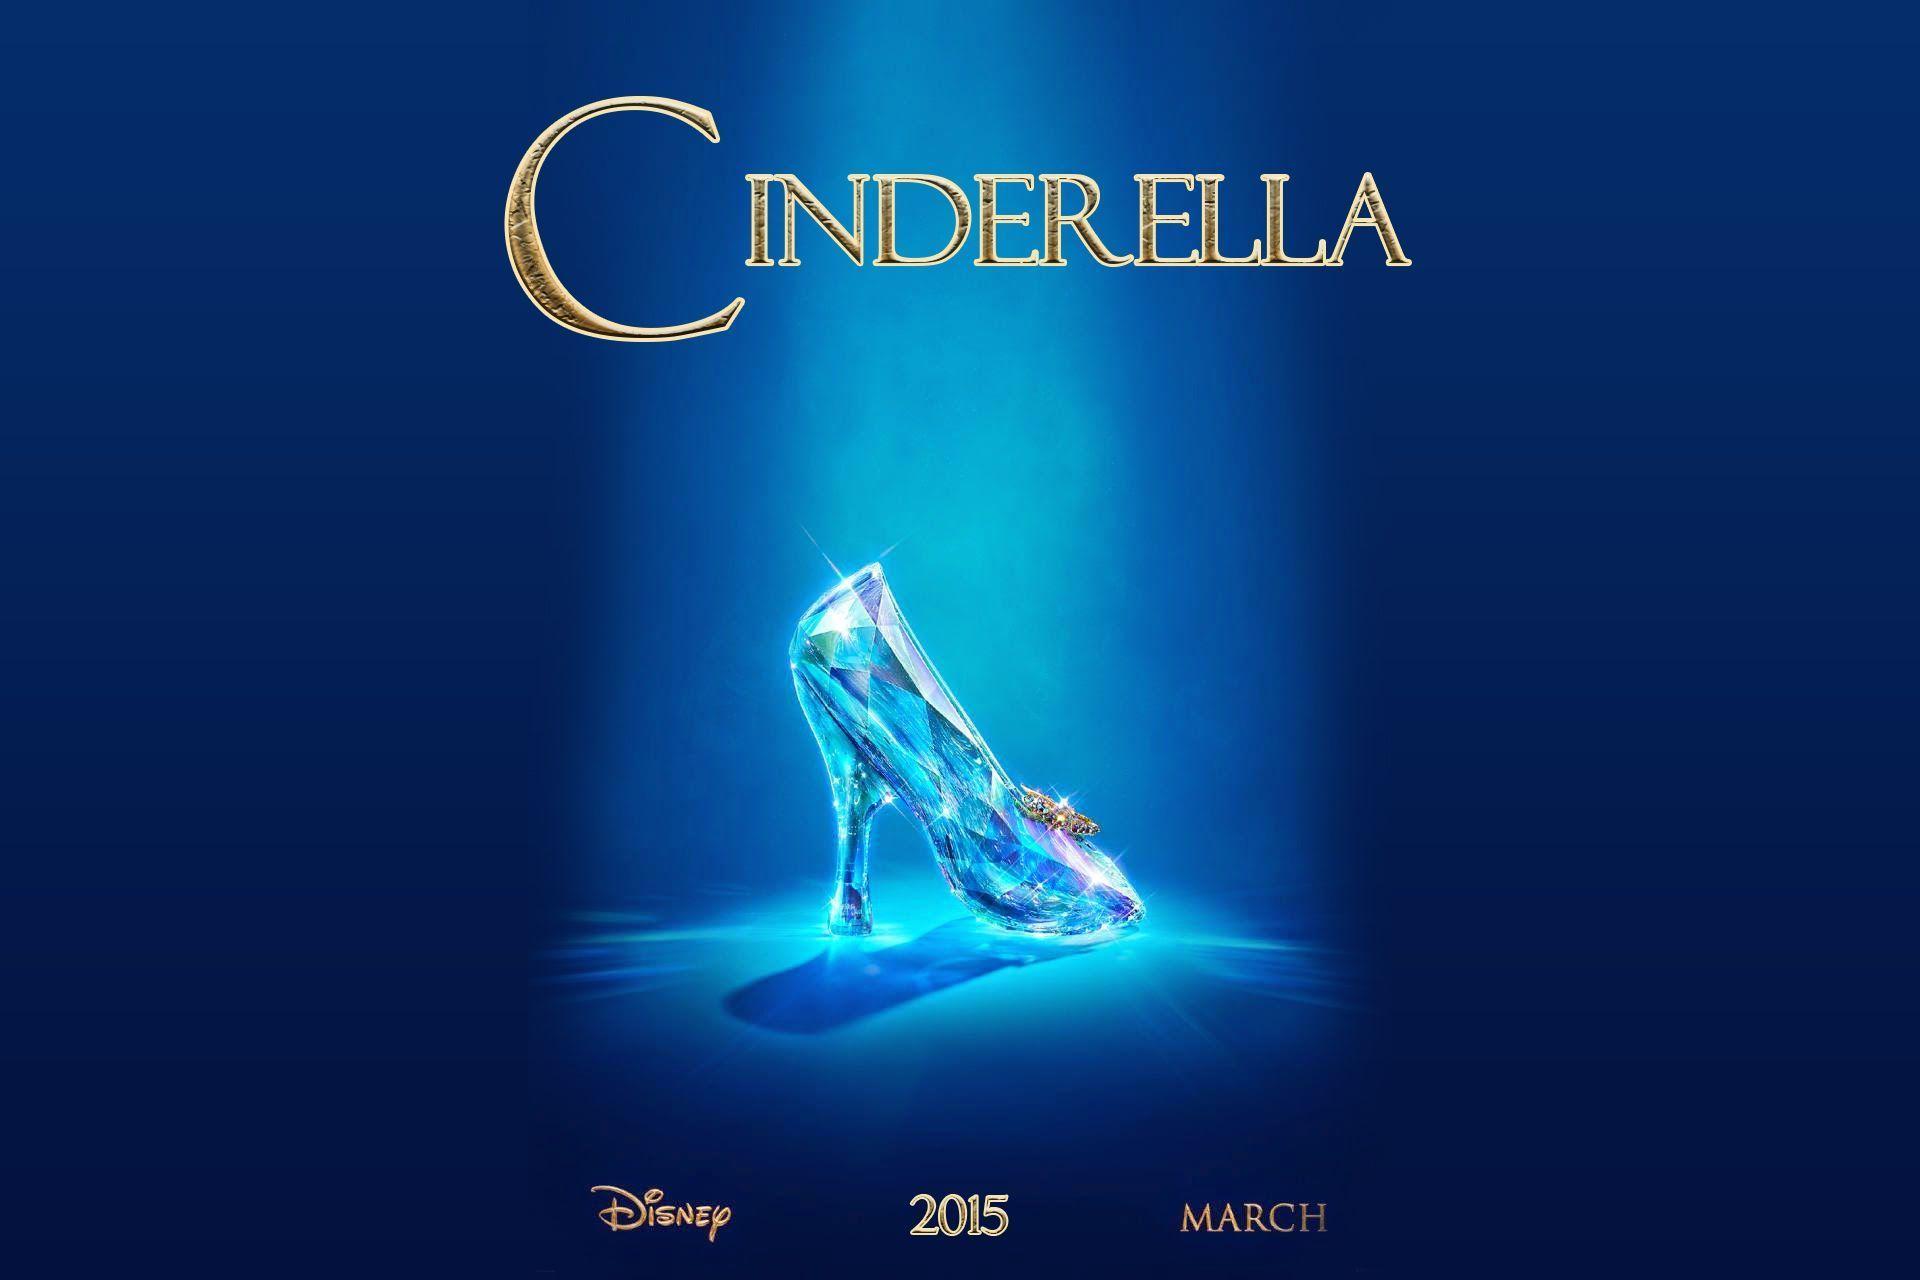 Disney Cinderella 2015 Movie Poster Wallpaper Wide or HD. Digital